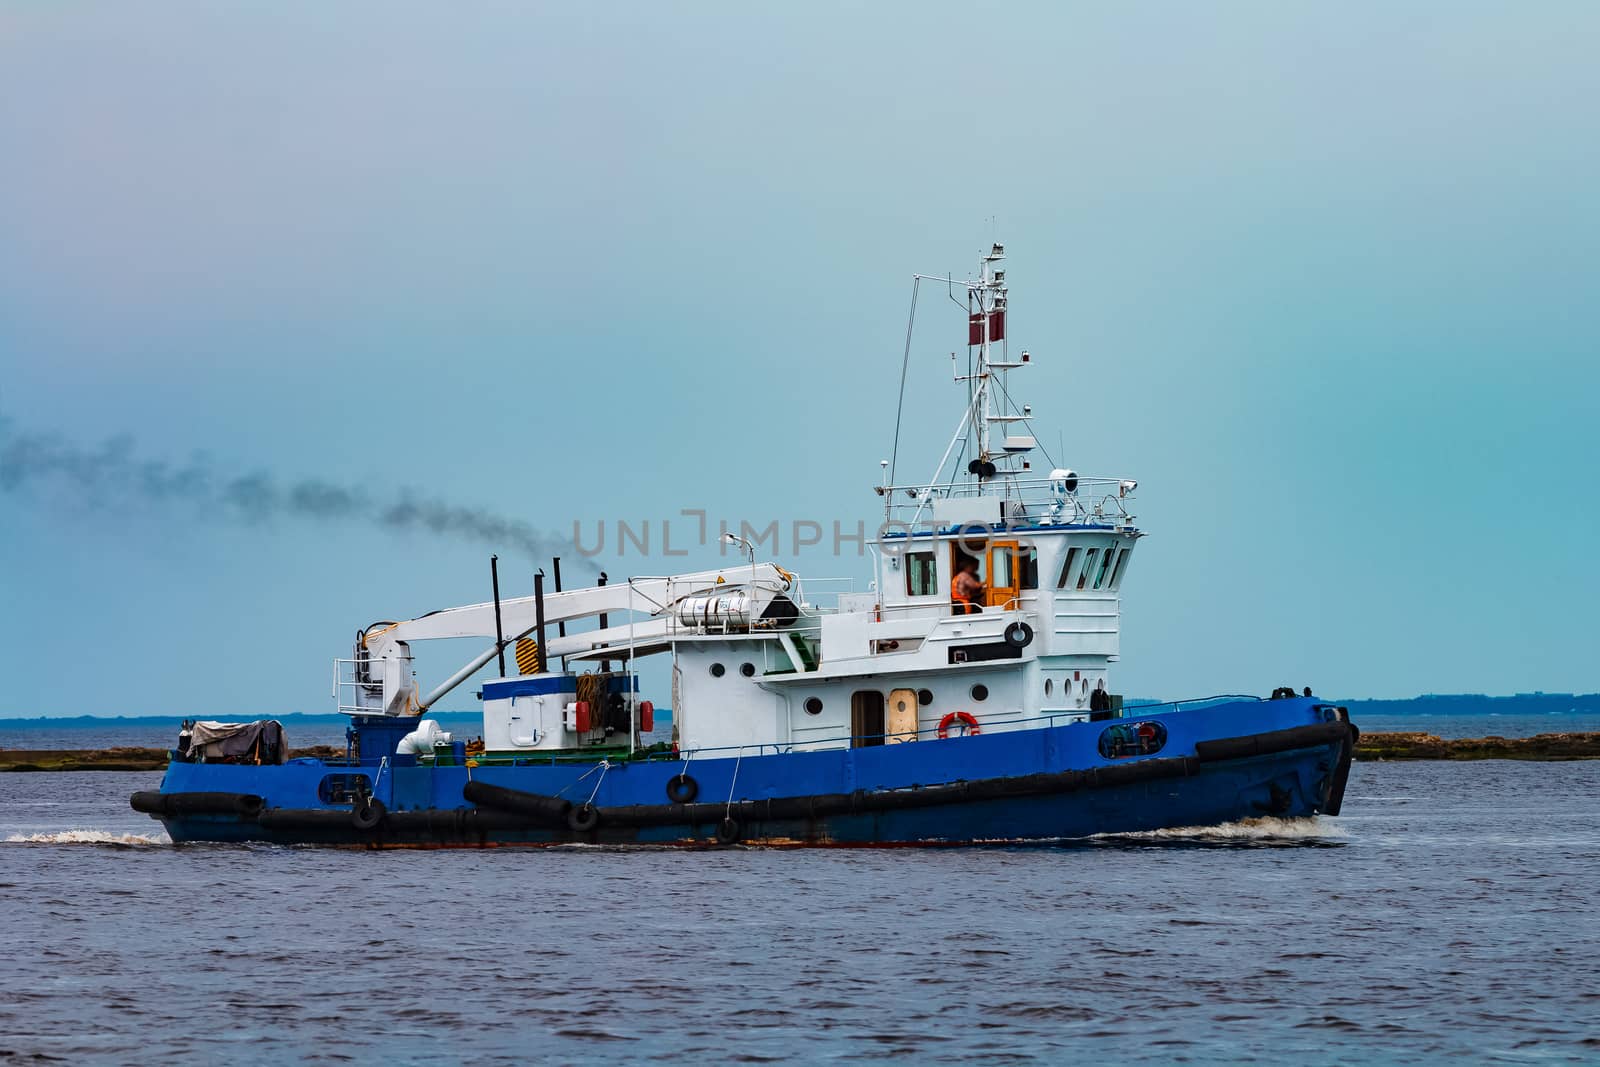 Blue tug ship underway by sengnsp